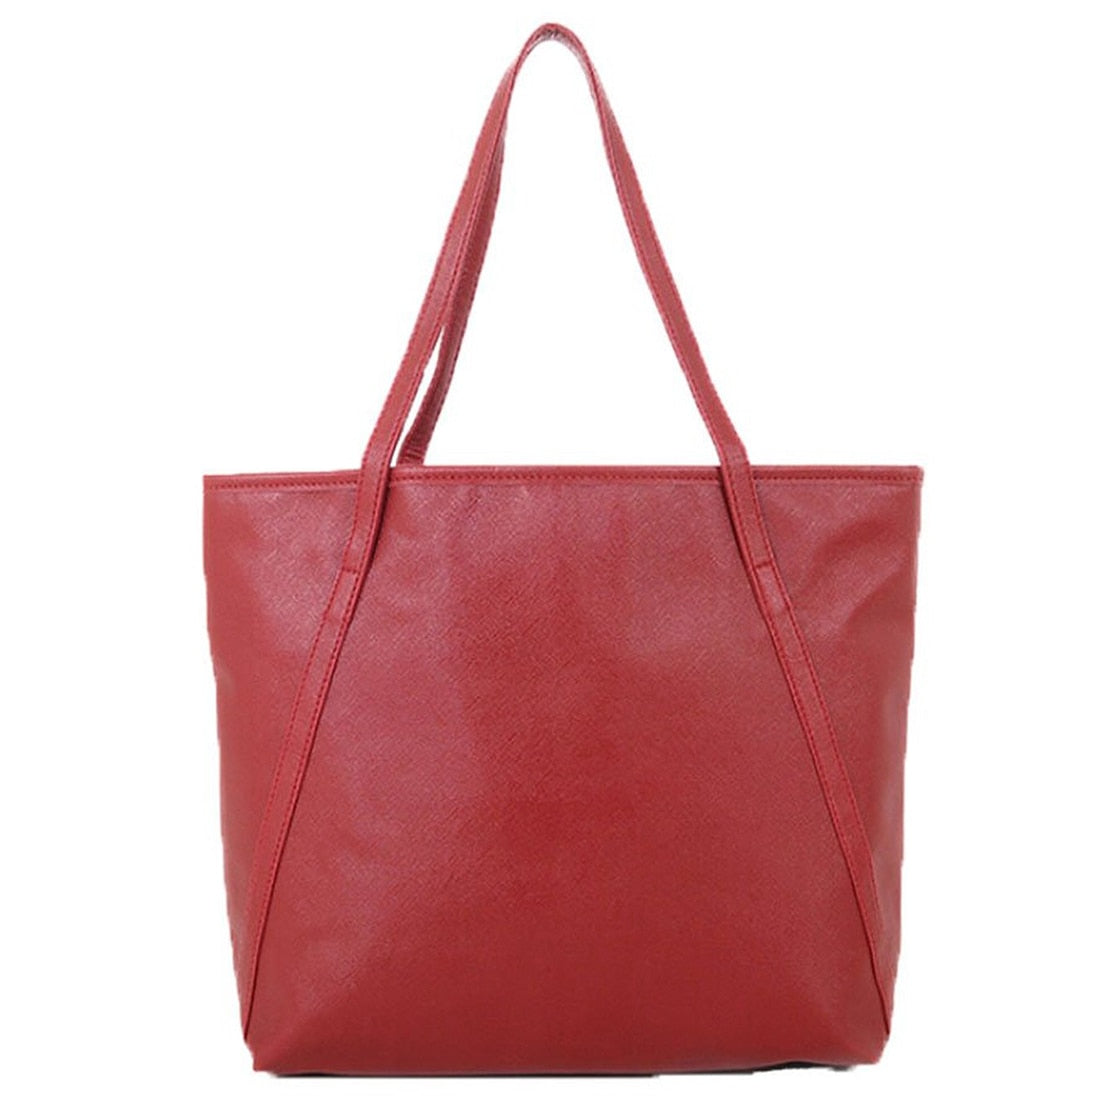 Hot Women Fashion PU Leather Handbags Shoulder Bags 4 colors - ebowsos